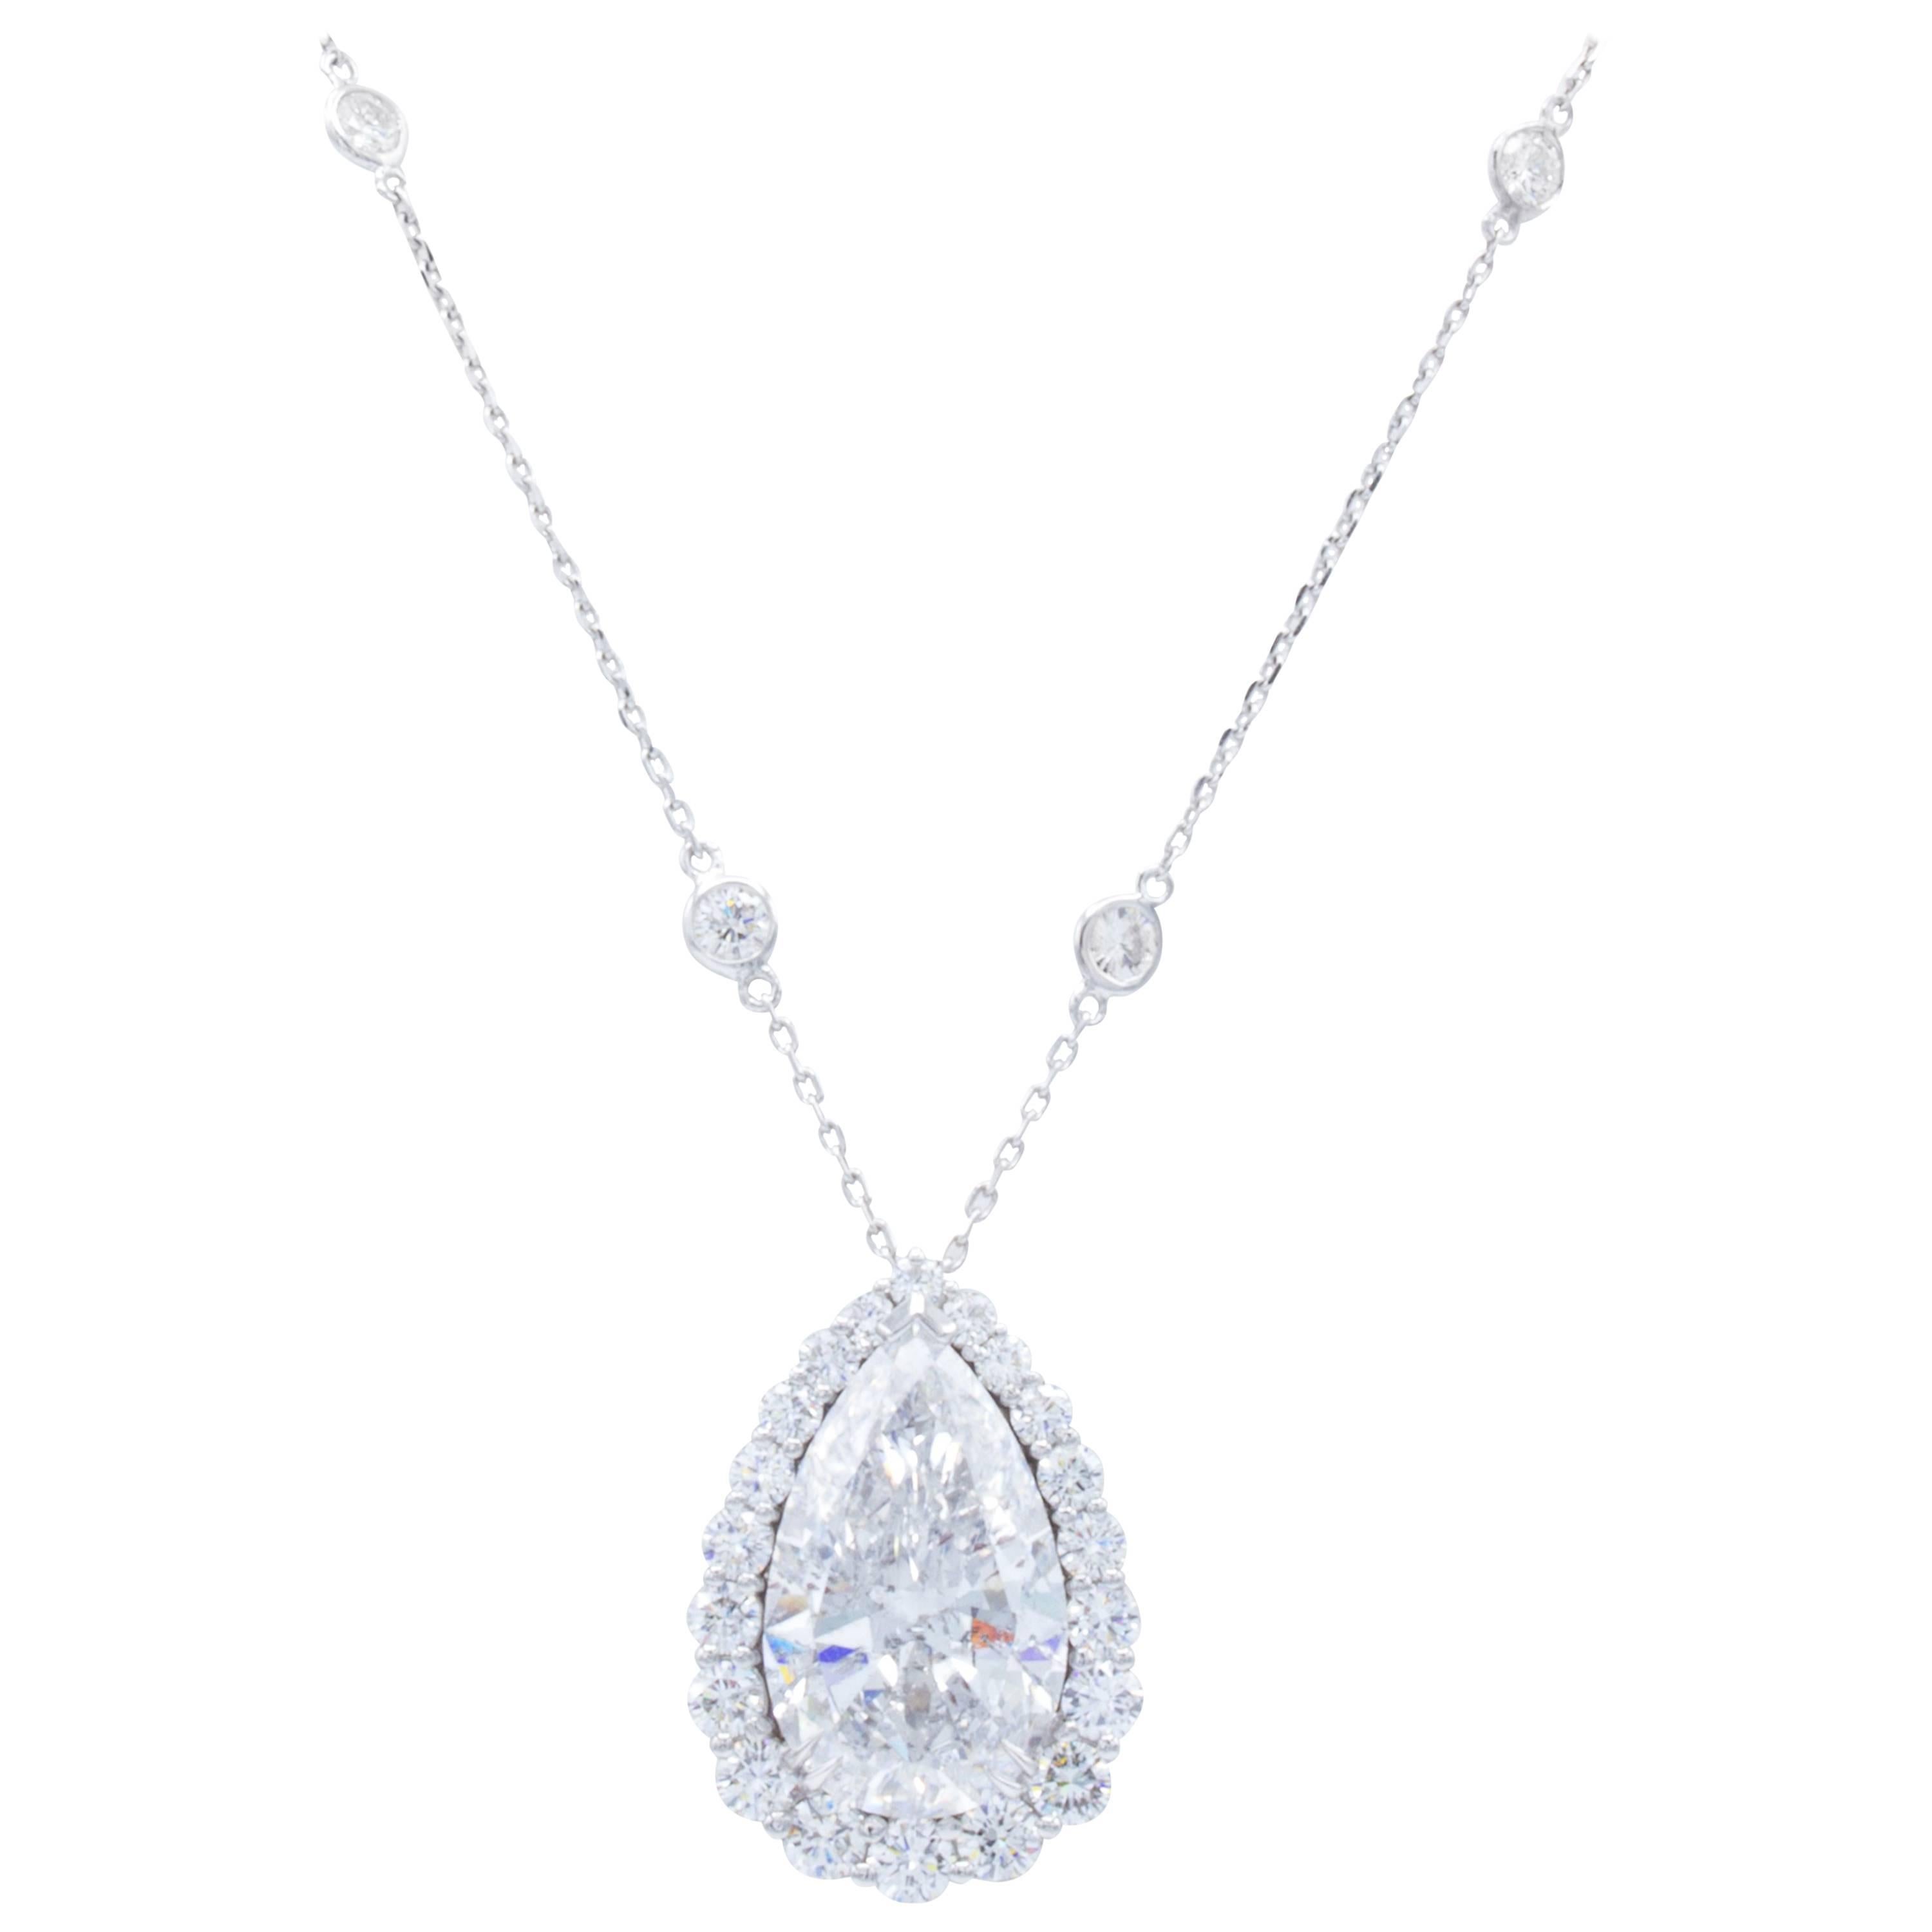 David Rosenberg 12 Carat Pear Shape D/I1 GIA Certified Diamond Pendant Necklace